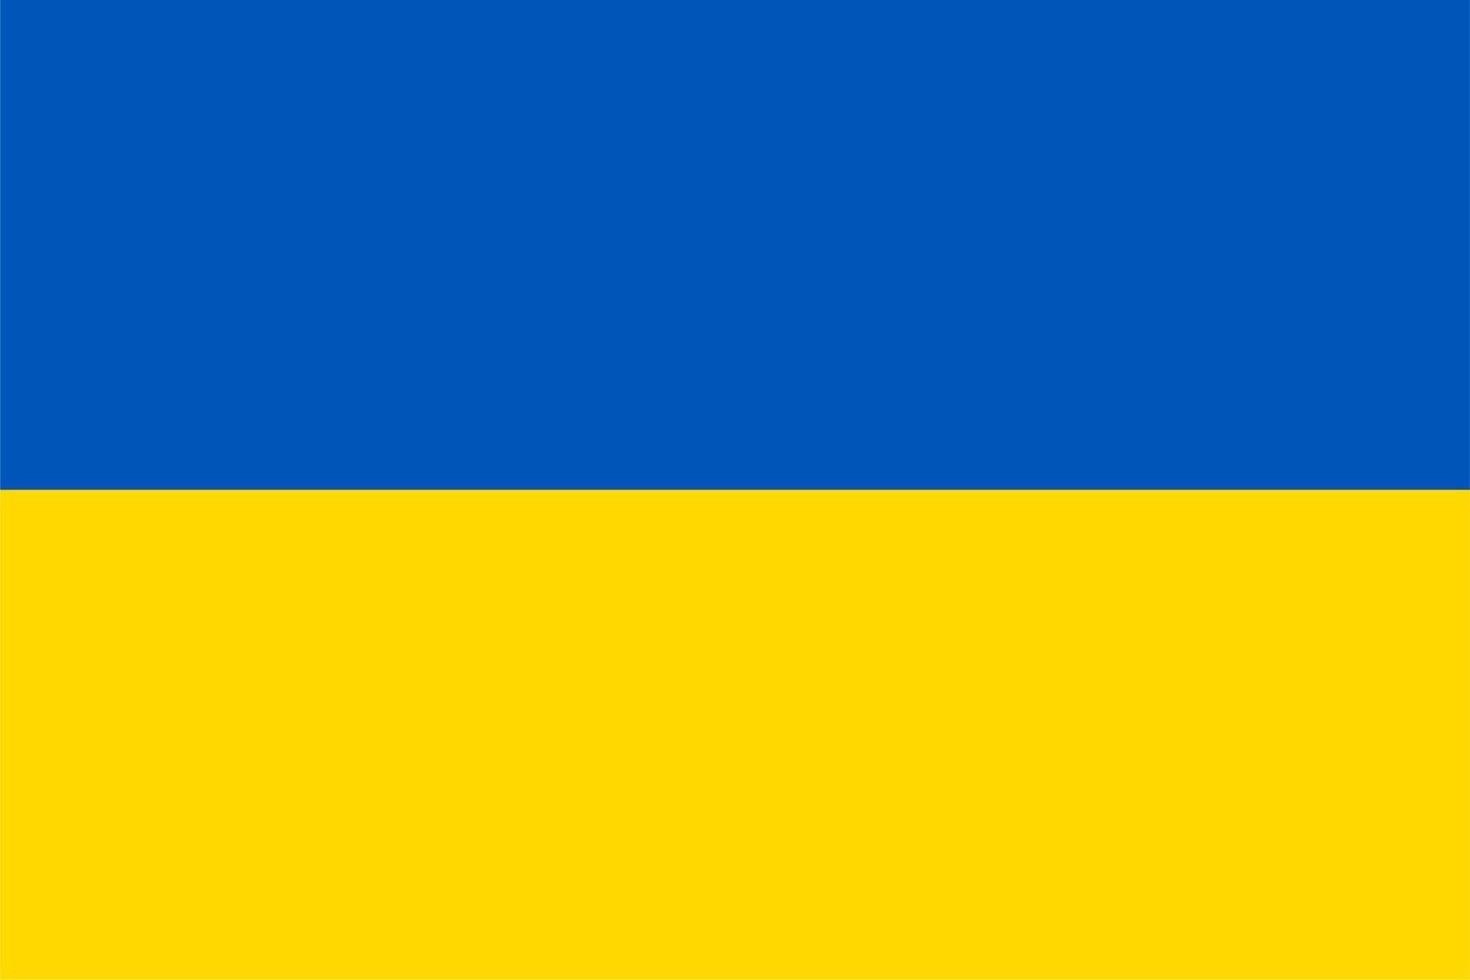 bandiera ucraina dell'ucraina vettore